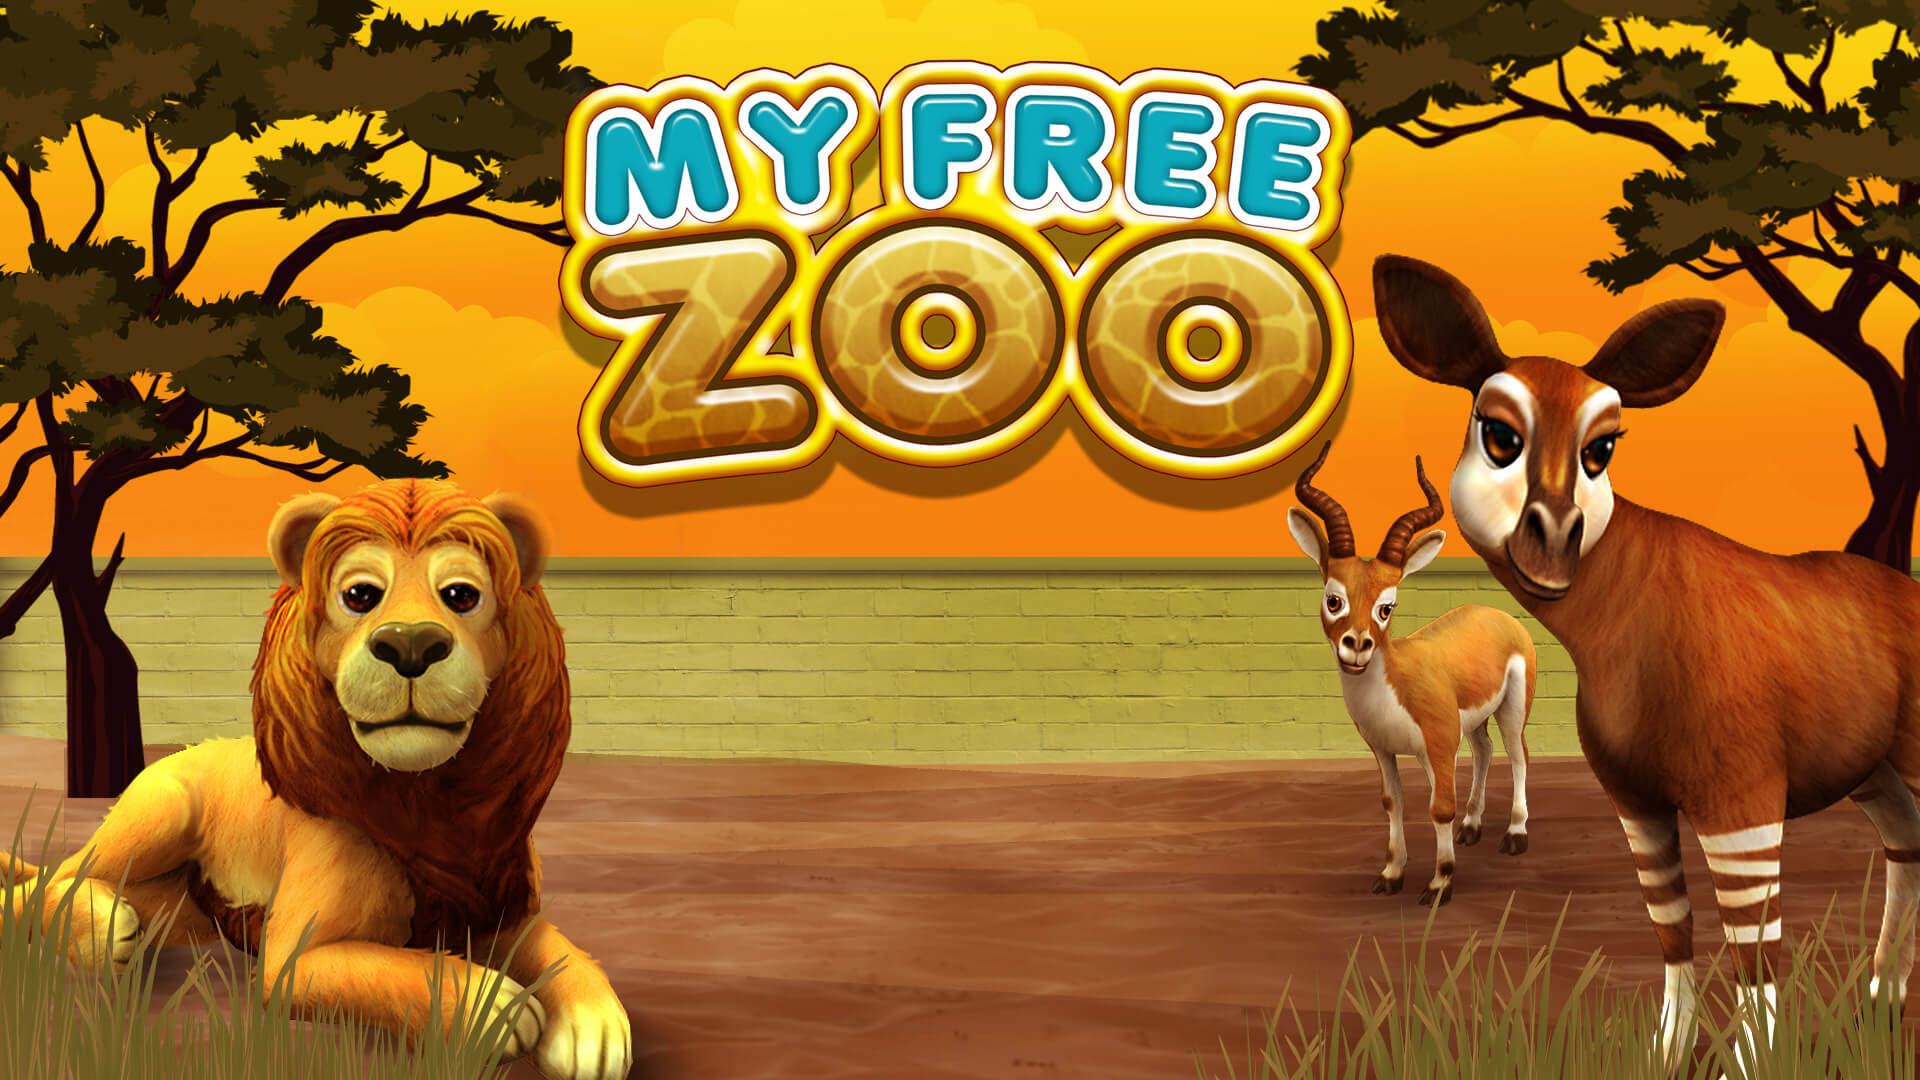 my free zoo mobile mod